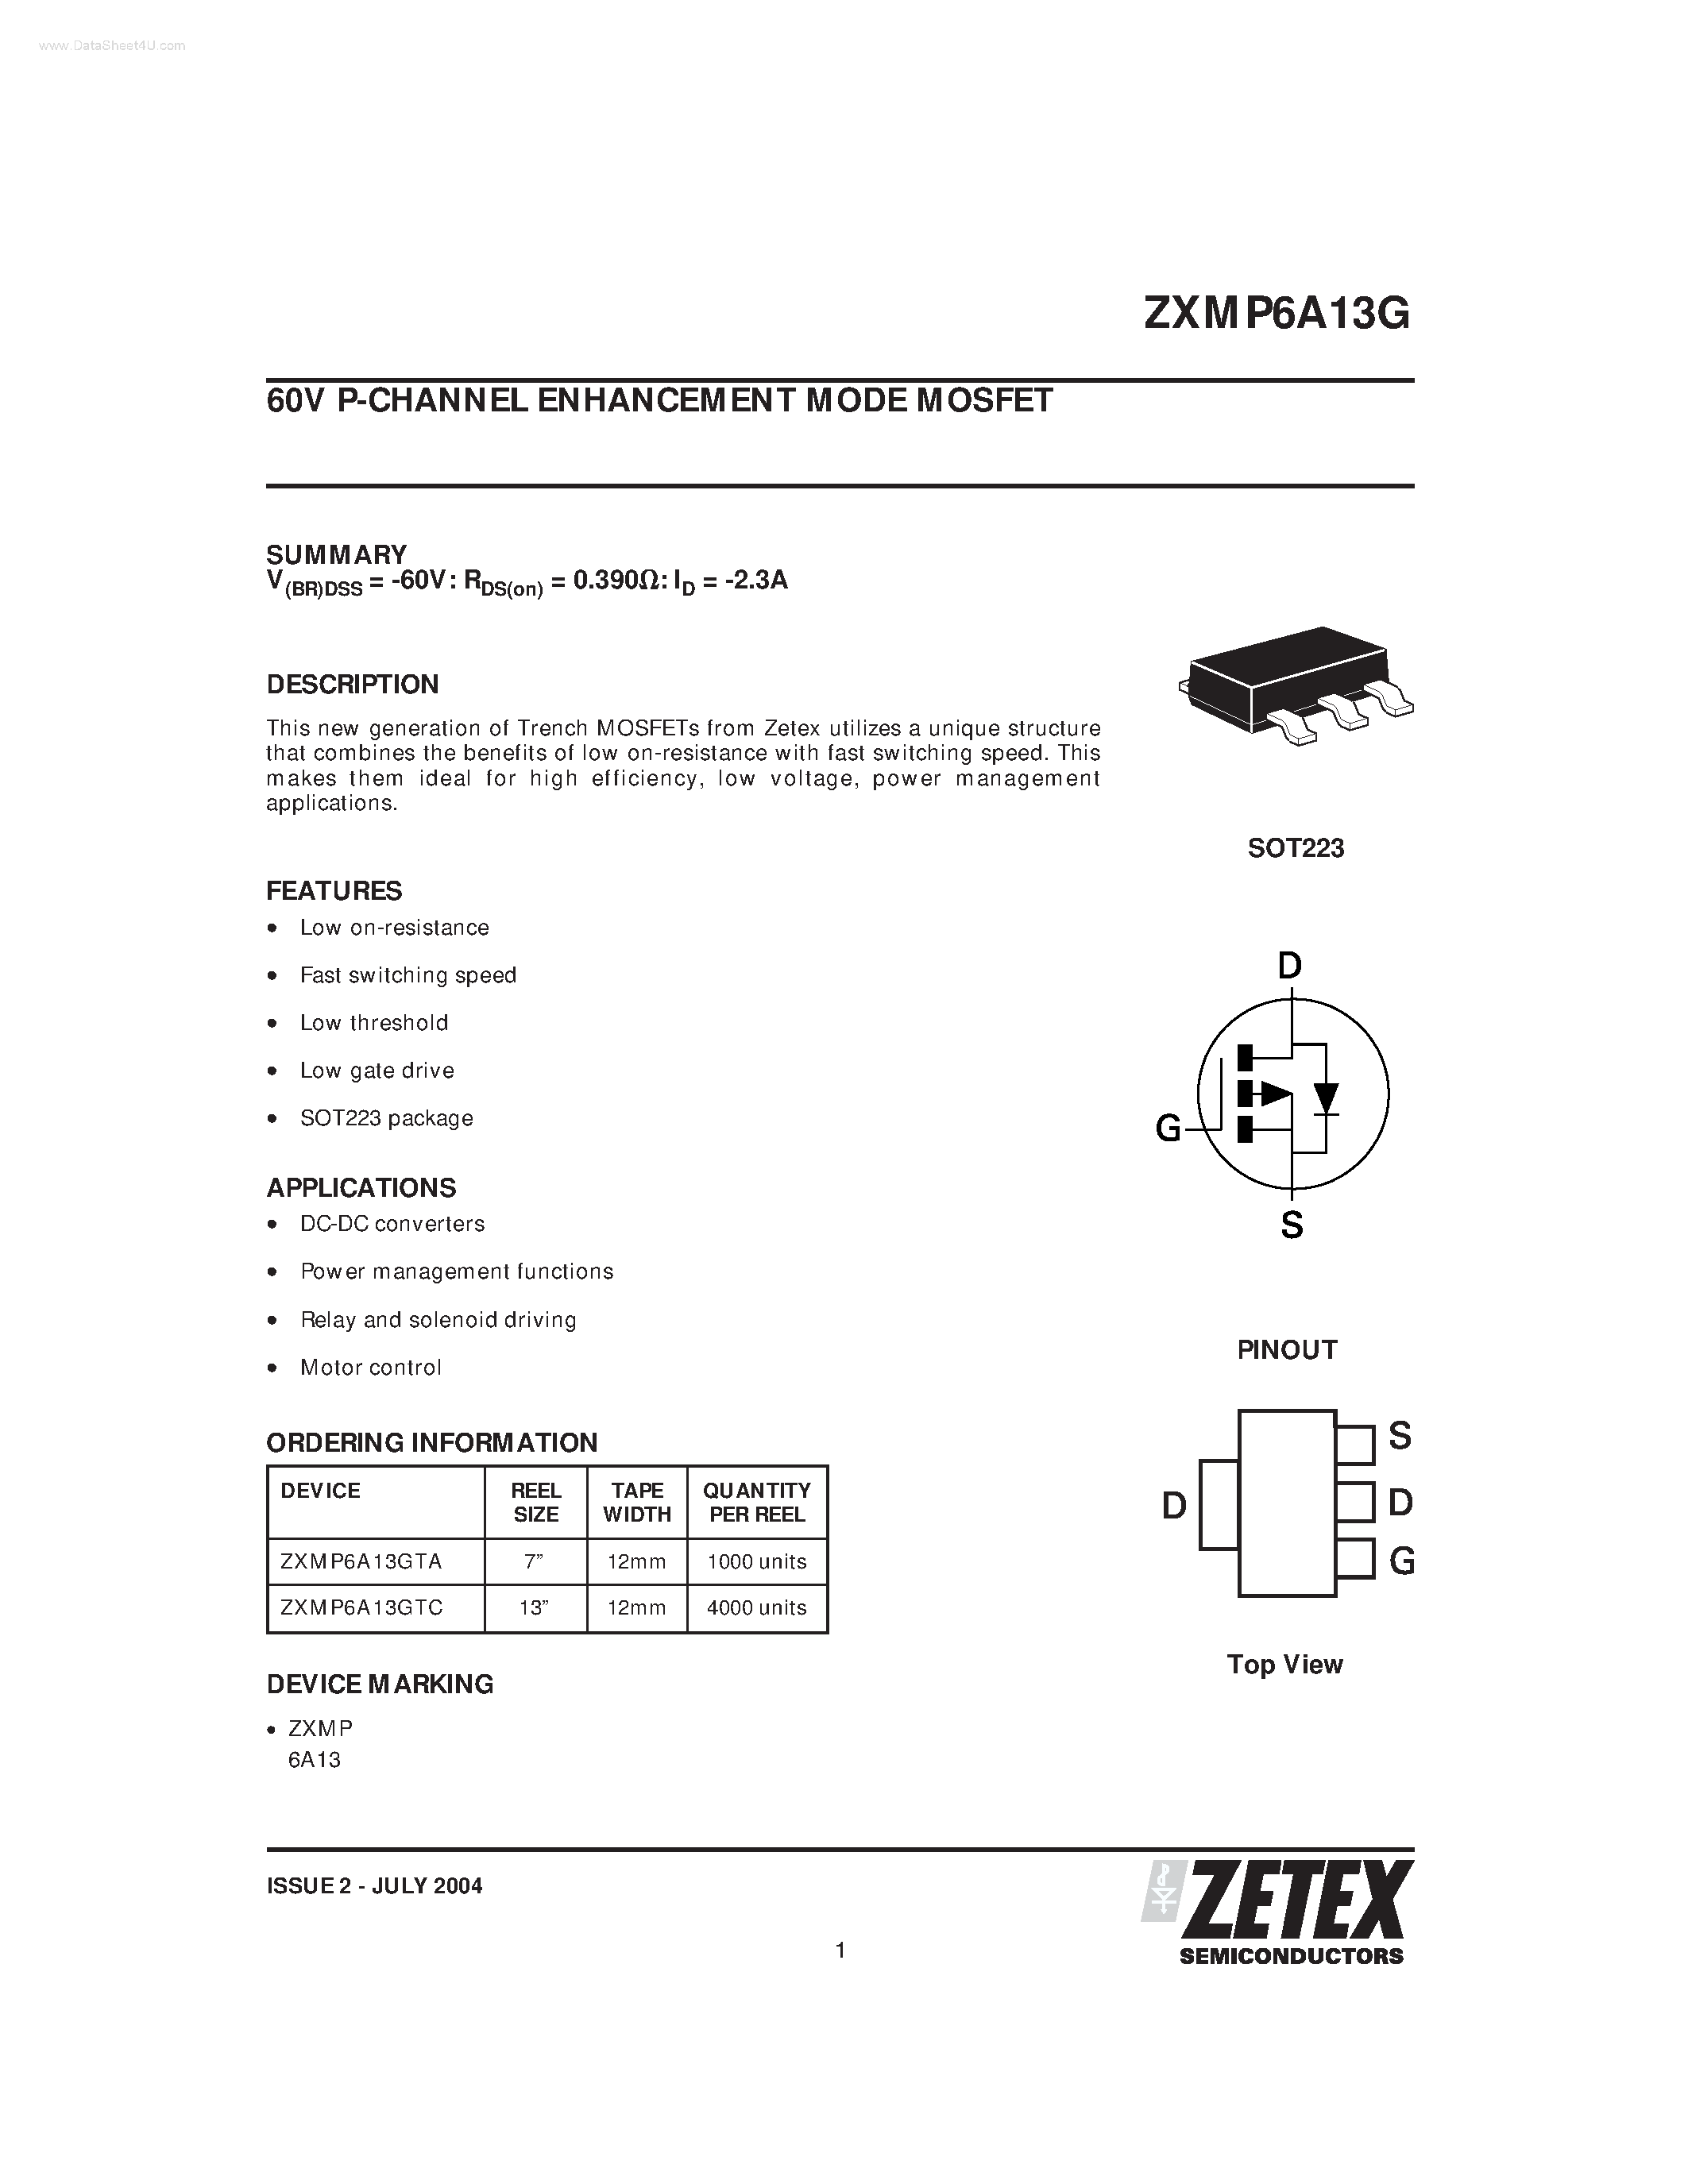 Даташит ZXMP6A13G - 60V P-CHANNEL ENHANCEMENT MODE MOSFET страница 1